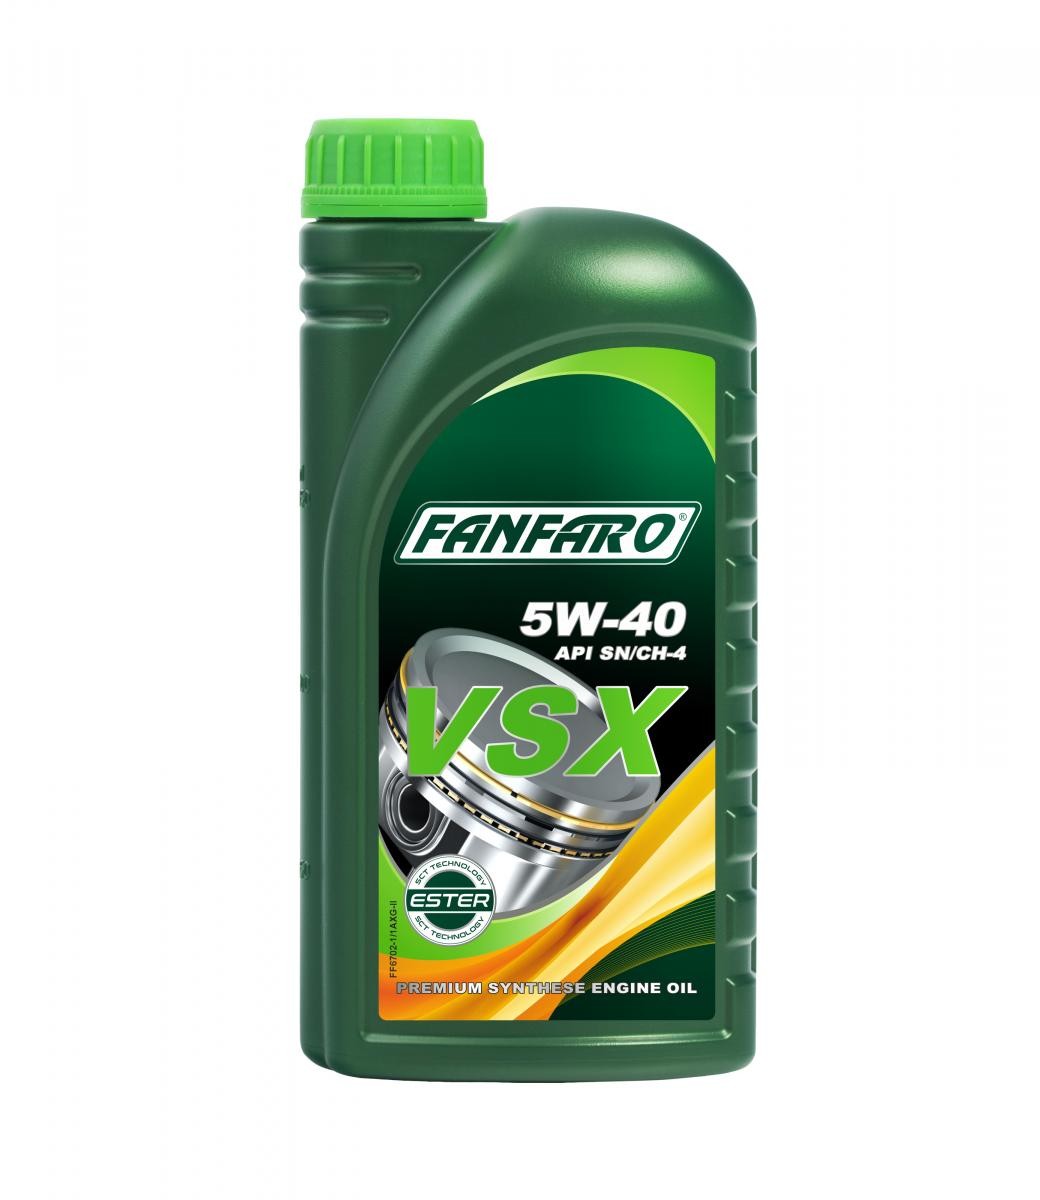 FANFARO Expert Line, VSX 5W-40, 1l, Synthetic Oil Motor oil FF6702-1 buy